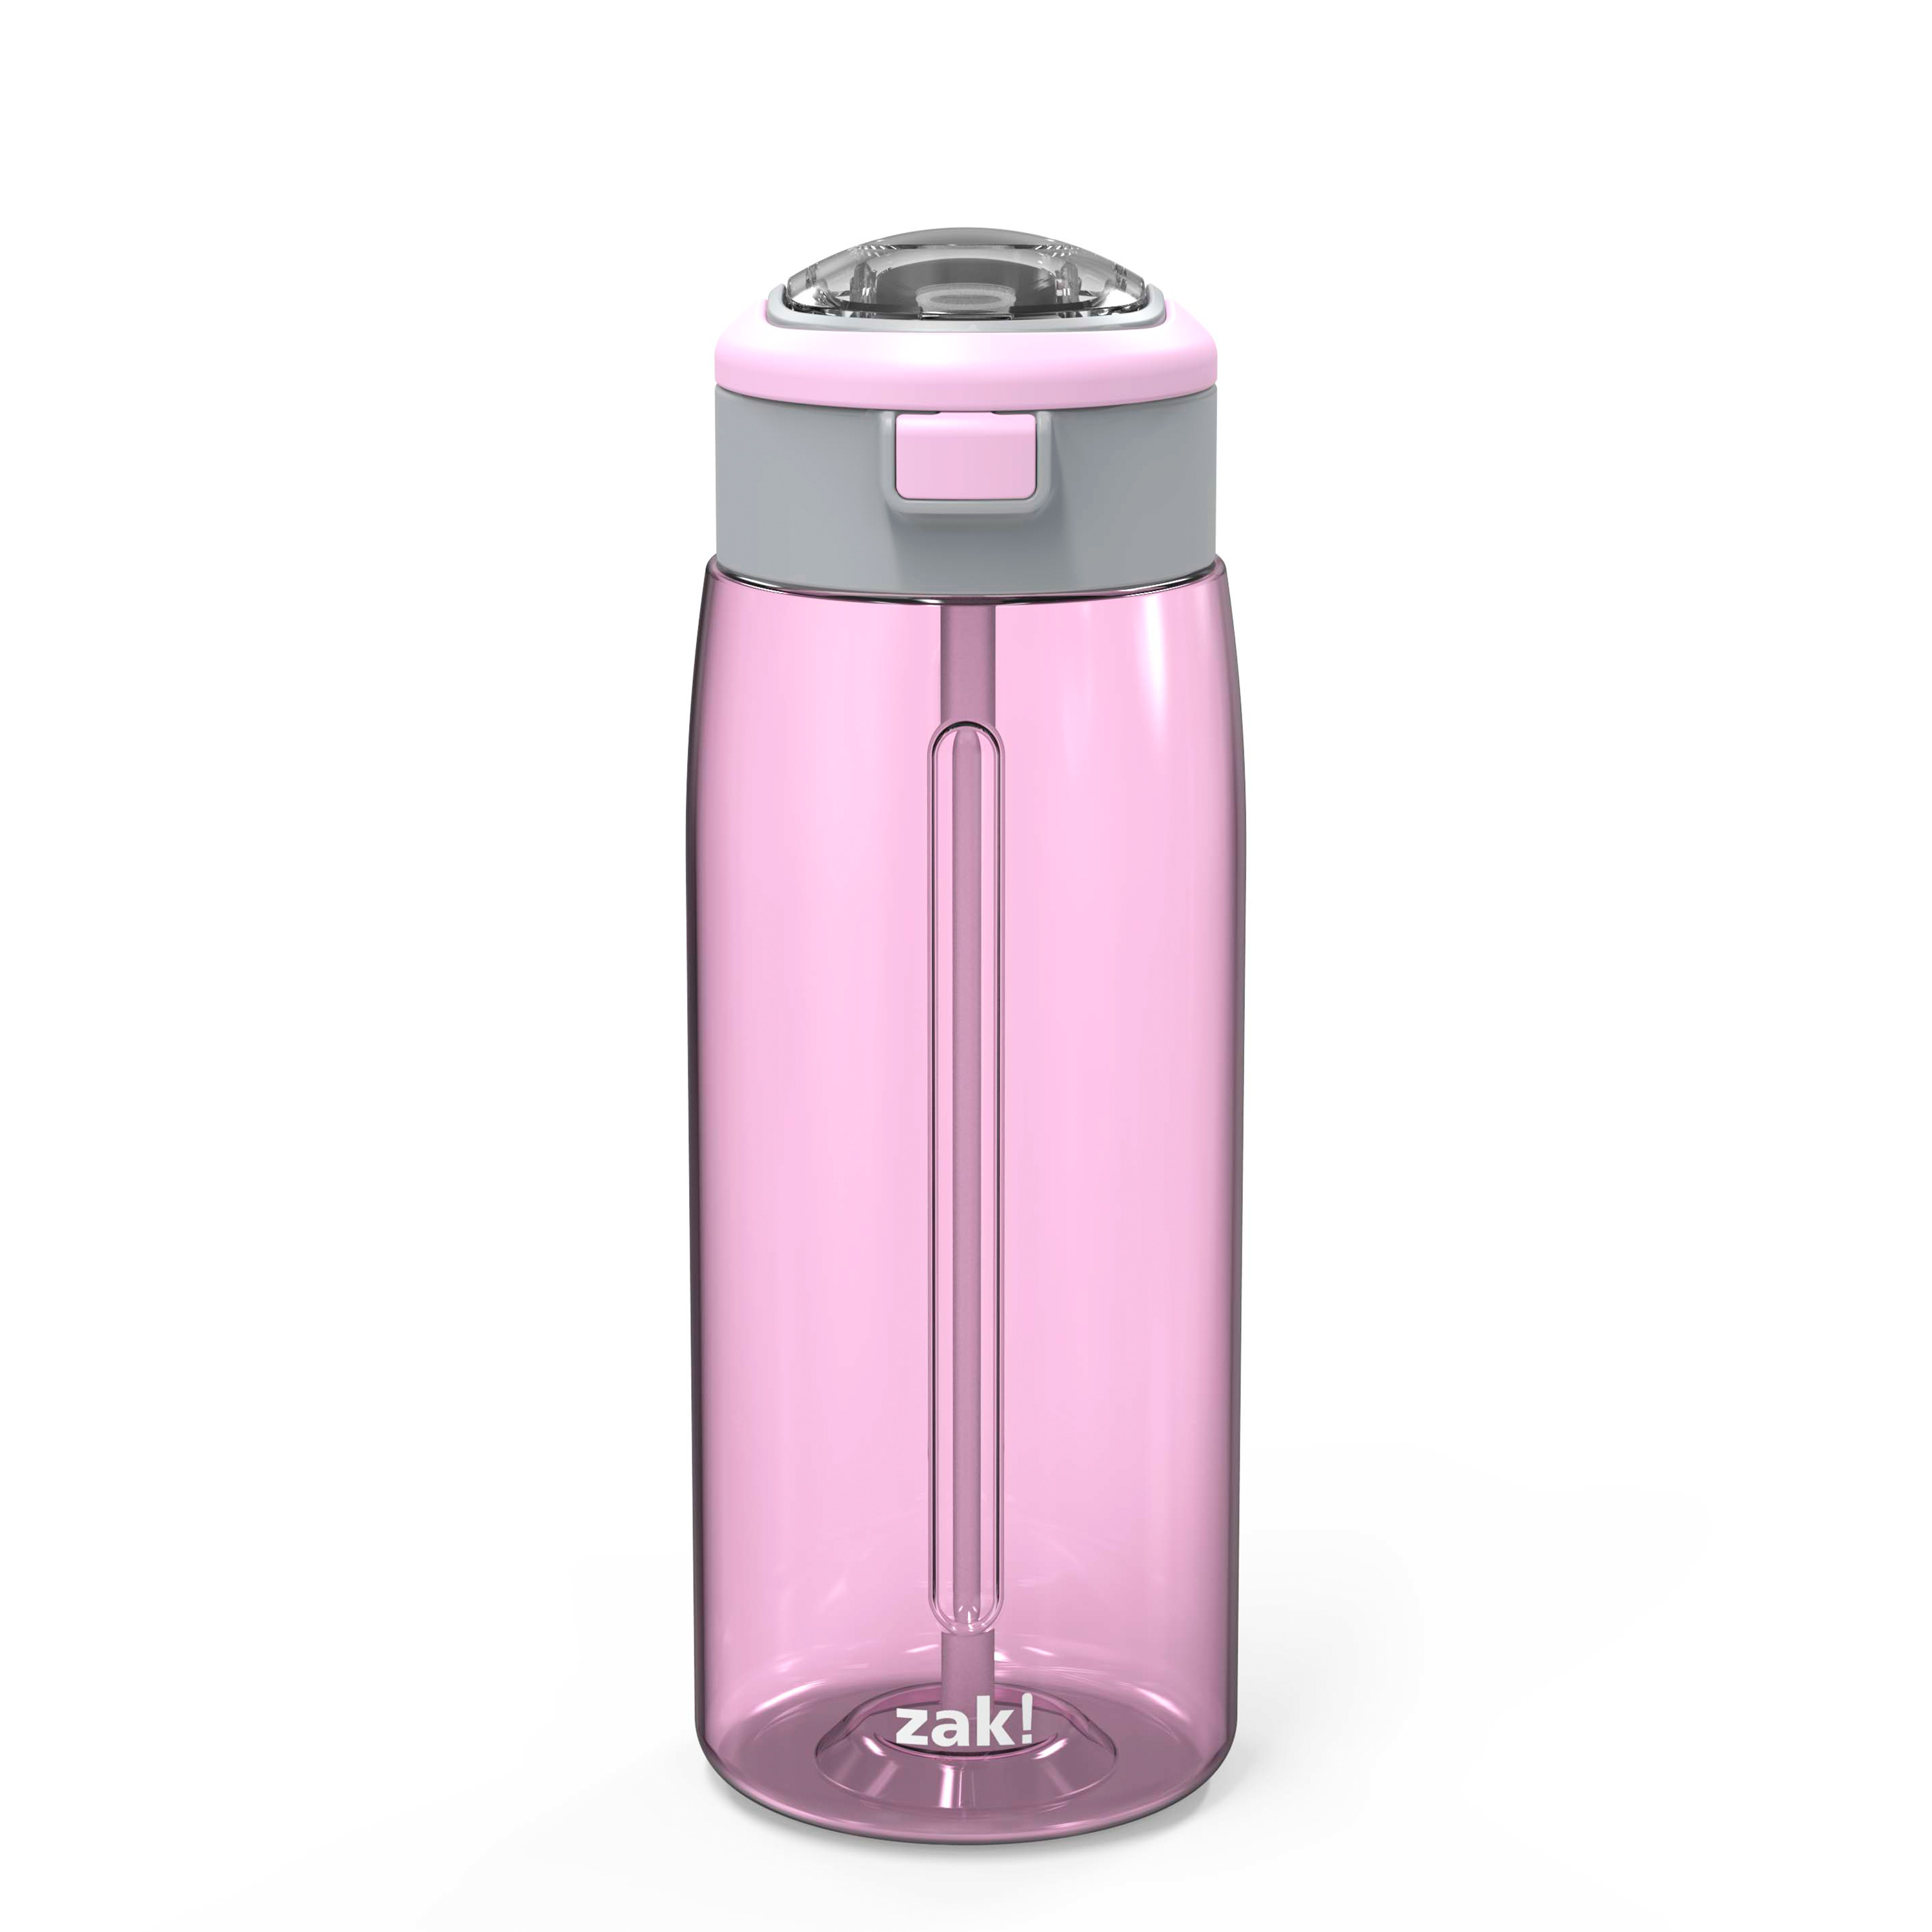 Genesis 32 ounce Reusable Plastic Water Bottle with Interchangeable Spouts, Lilac slideshow image 1